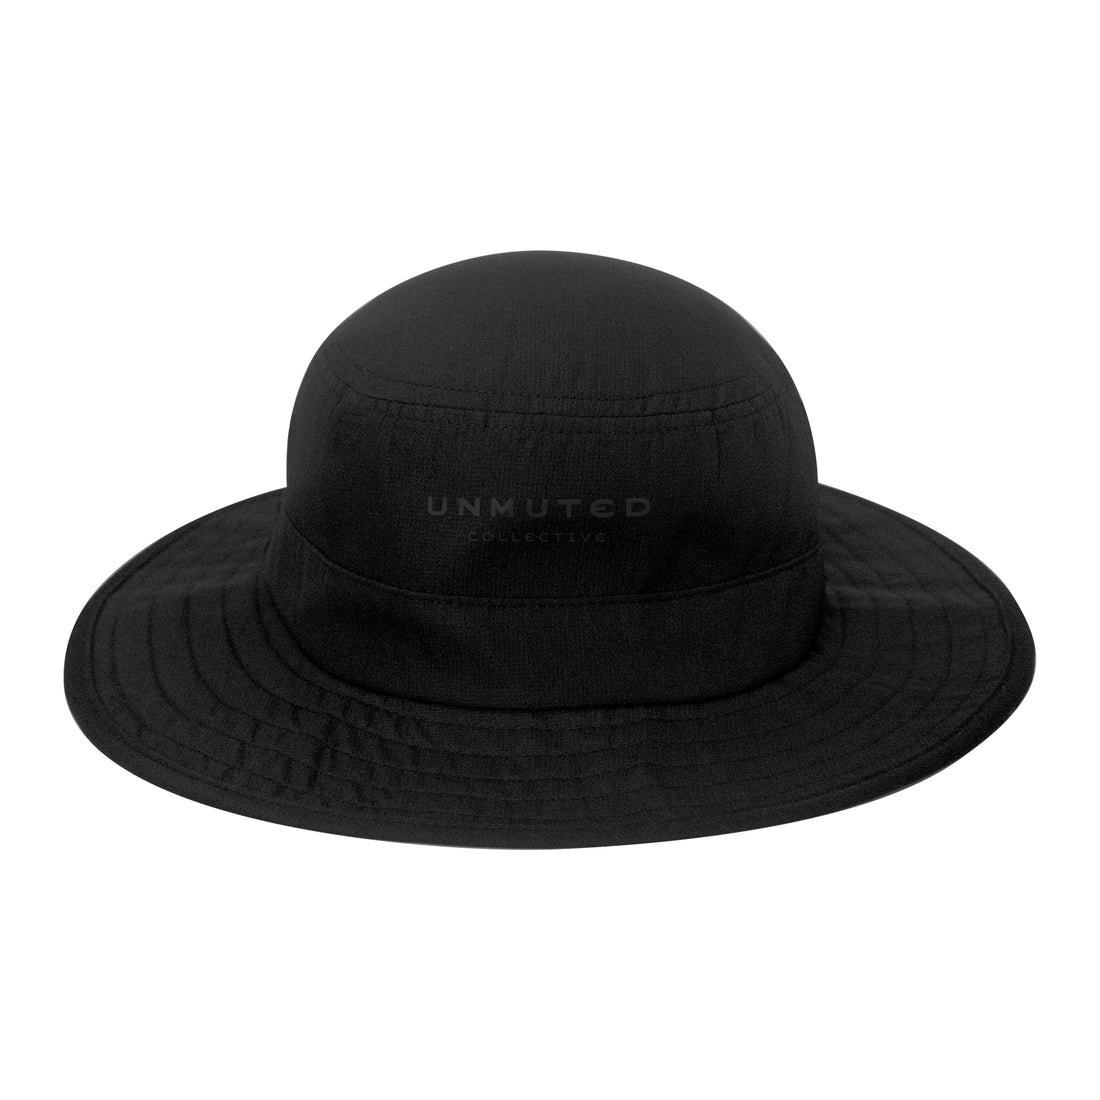 Riverside - Technical boonie hat